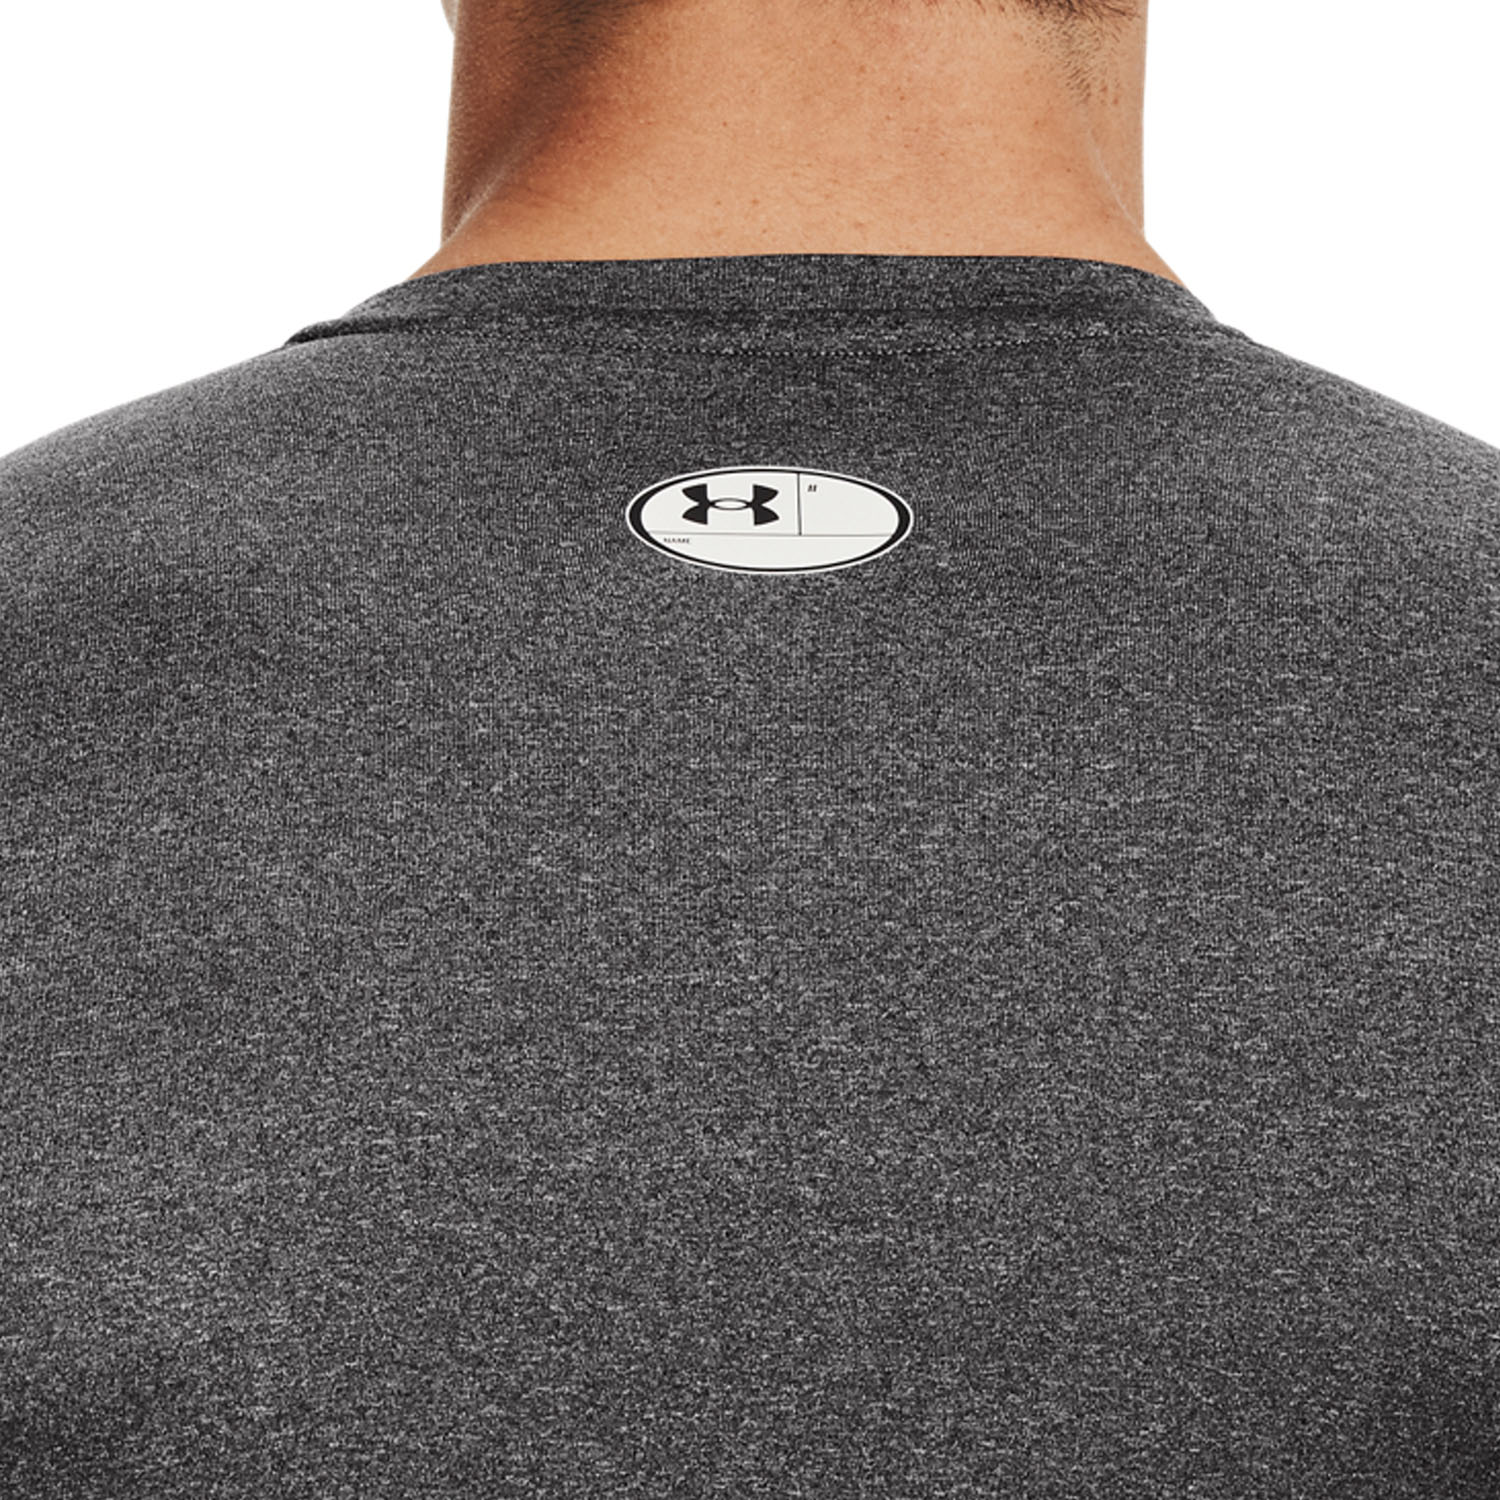 Under Armour HeatGear Compression Men's Tennis Shirt - Carbon